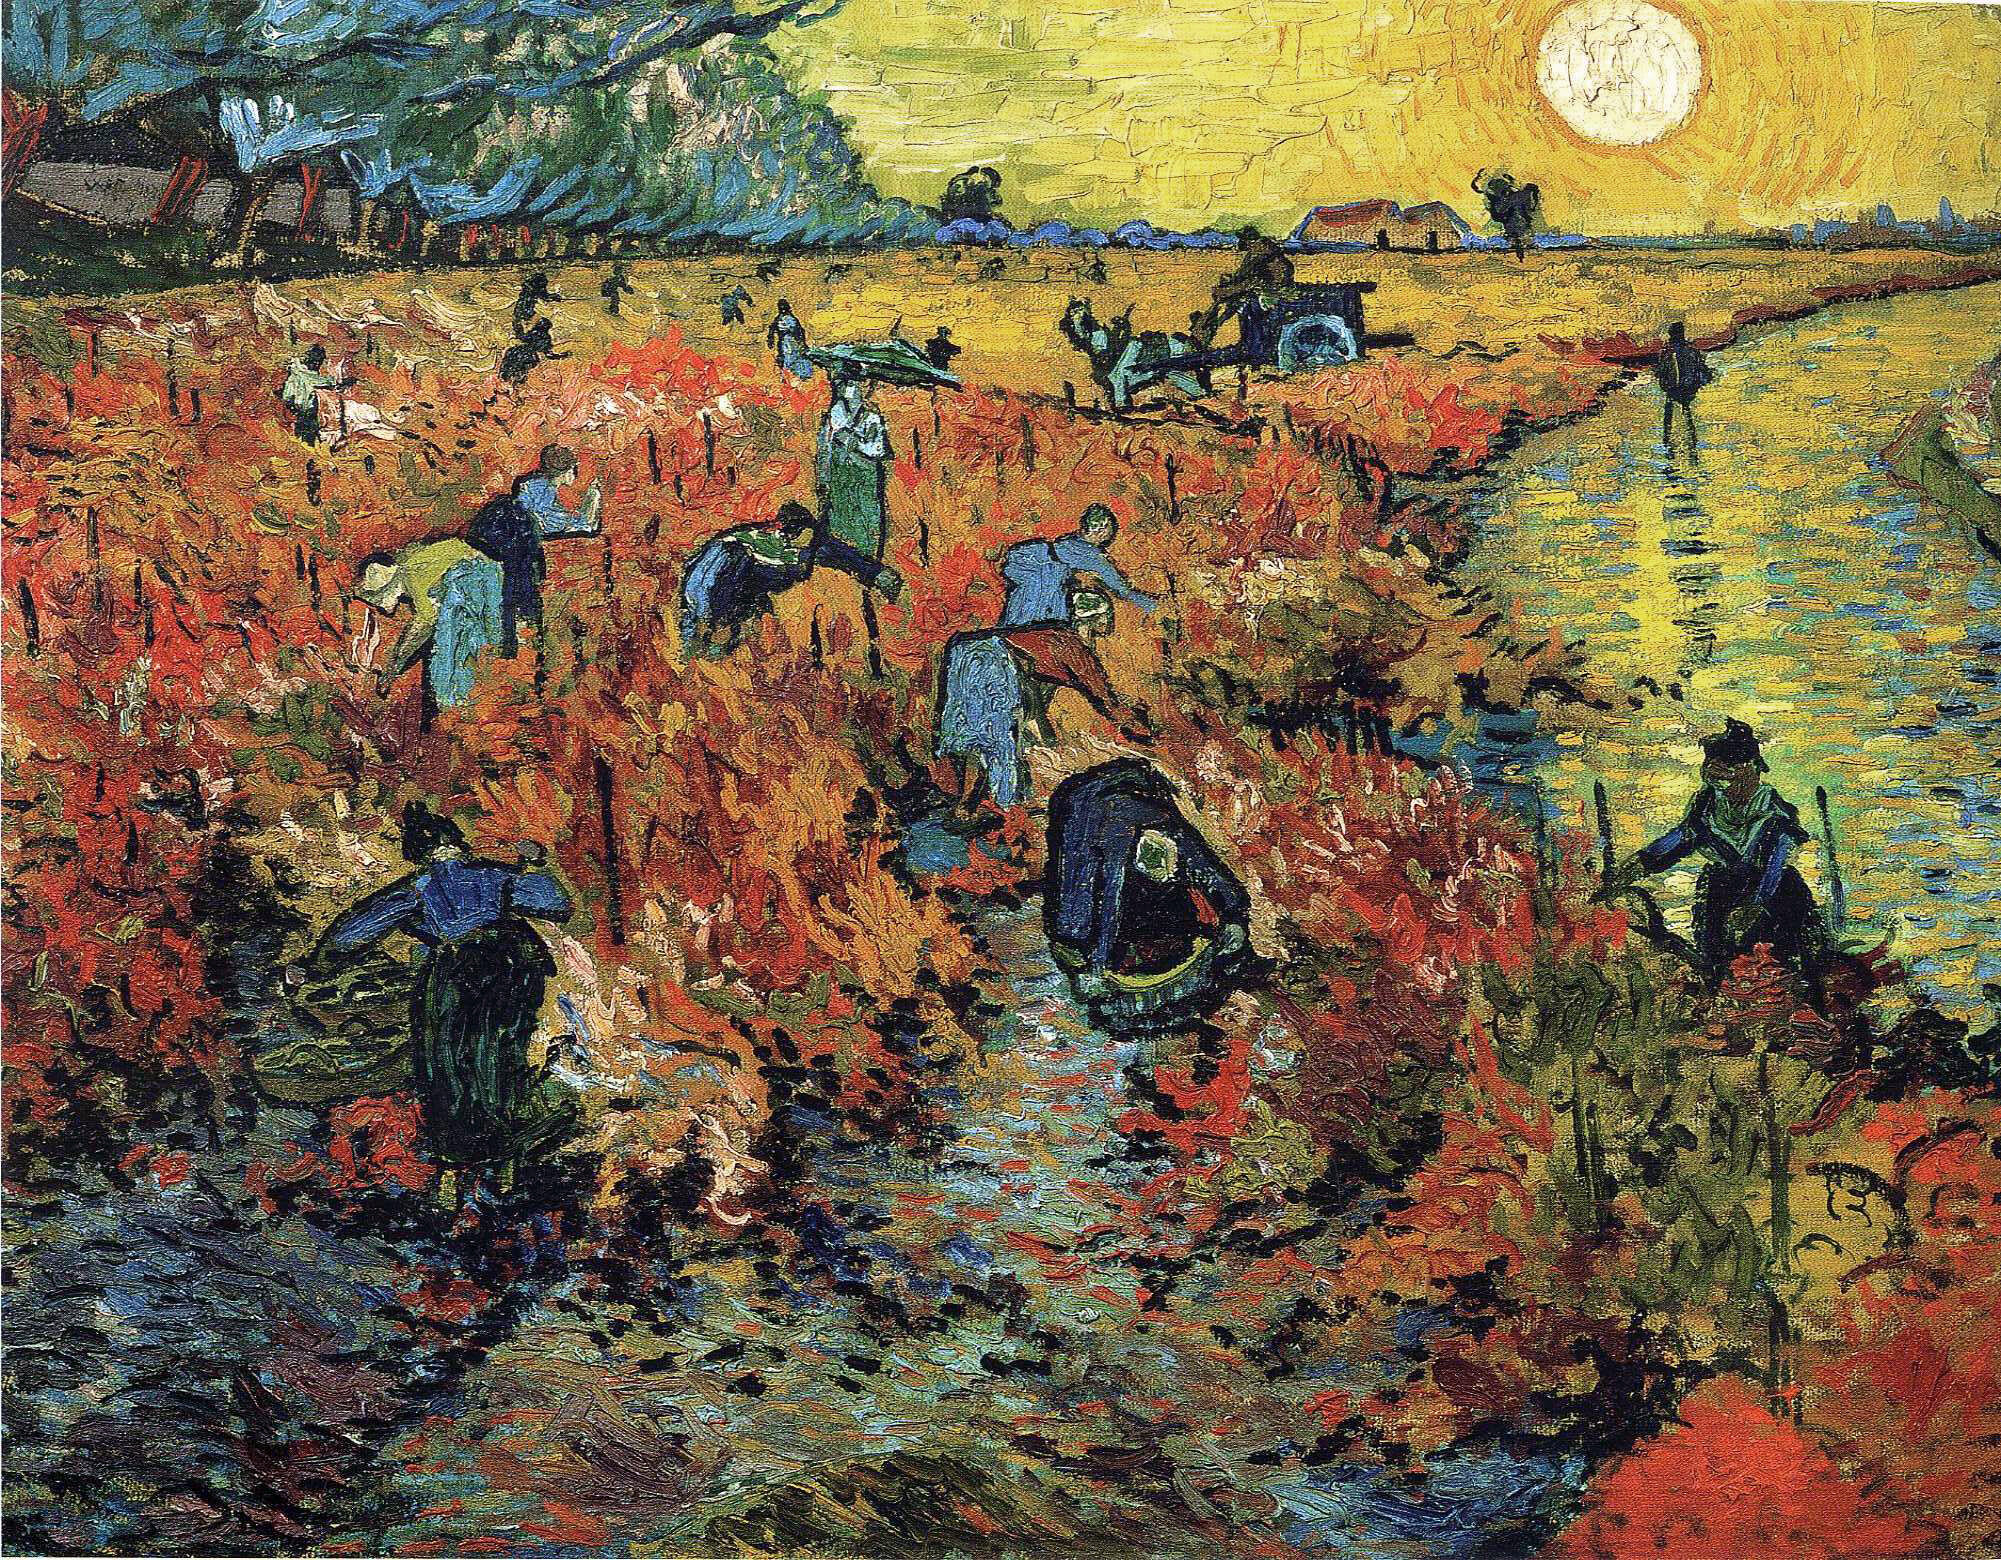 Vincent van Gogh, The Red Vineyards near Arles, 1888